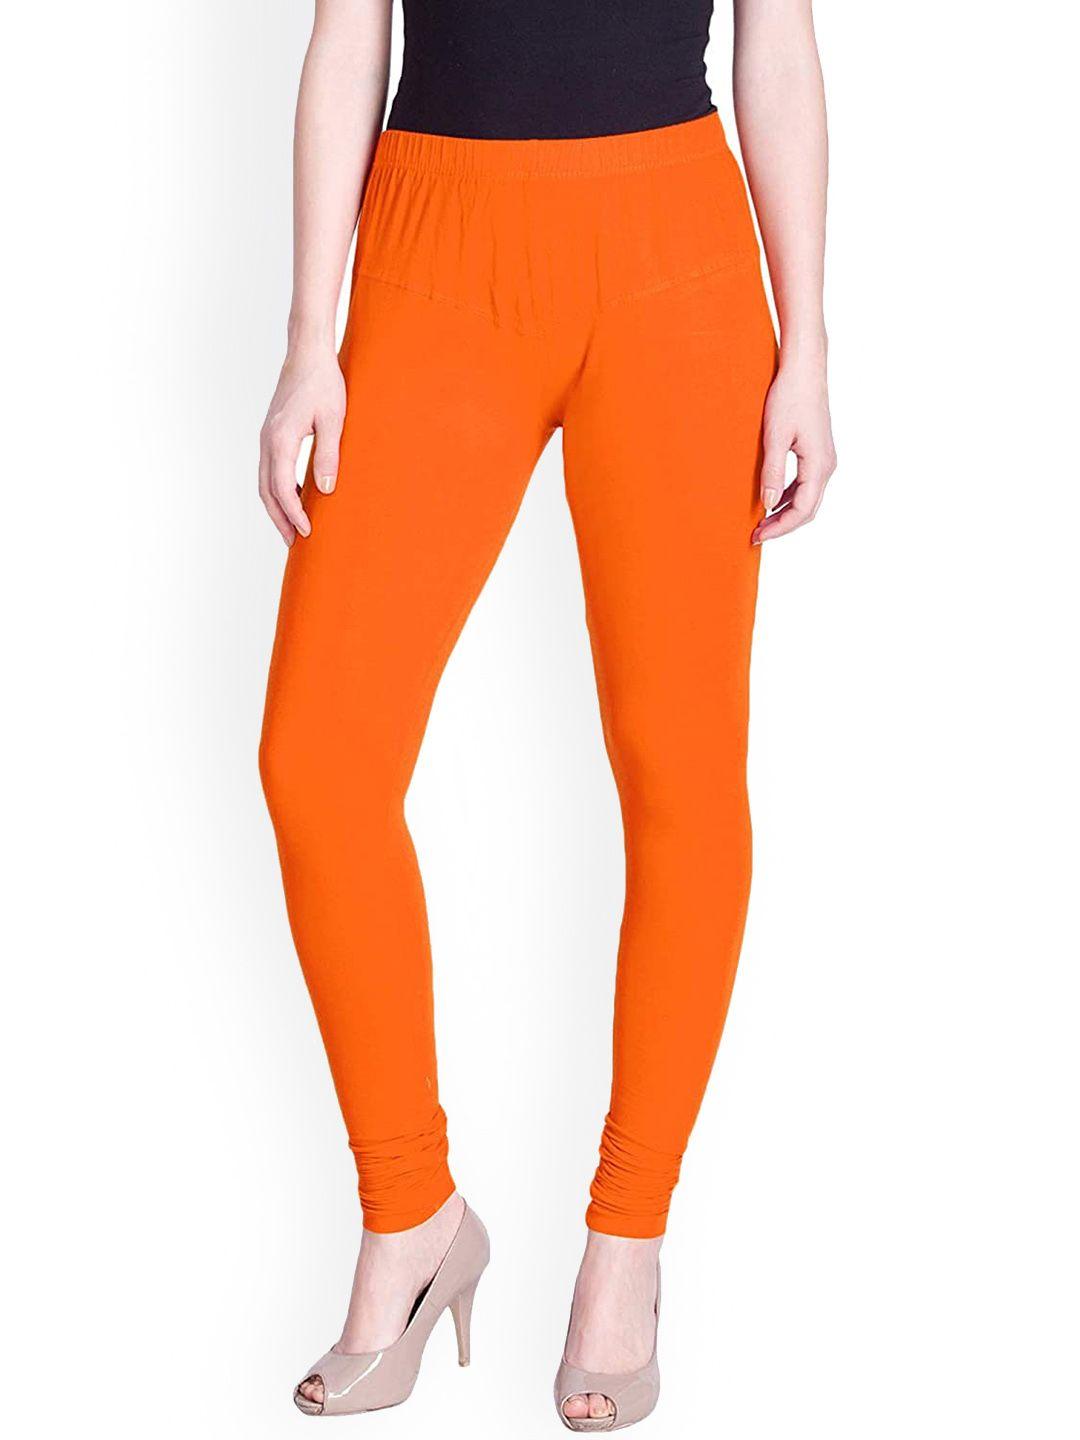 baesd cotton skinny-fit churidar-length leggings